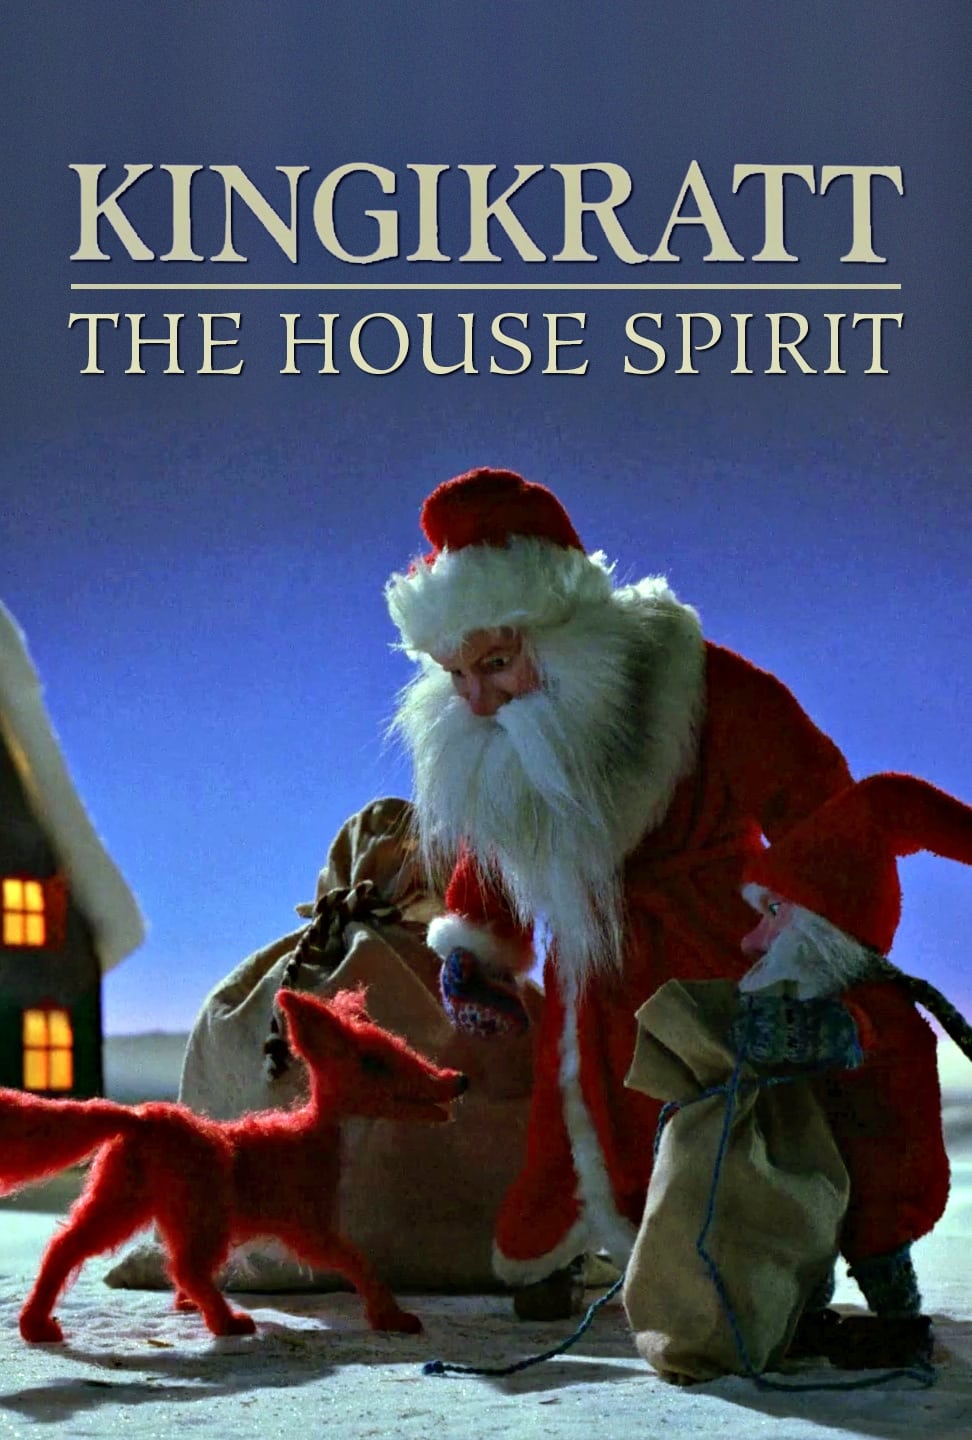 The House Spirit